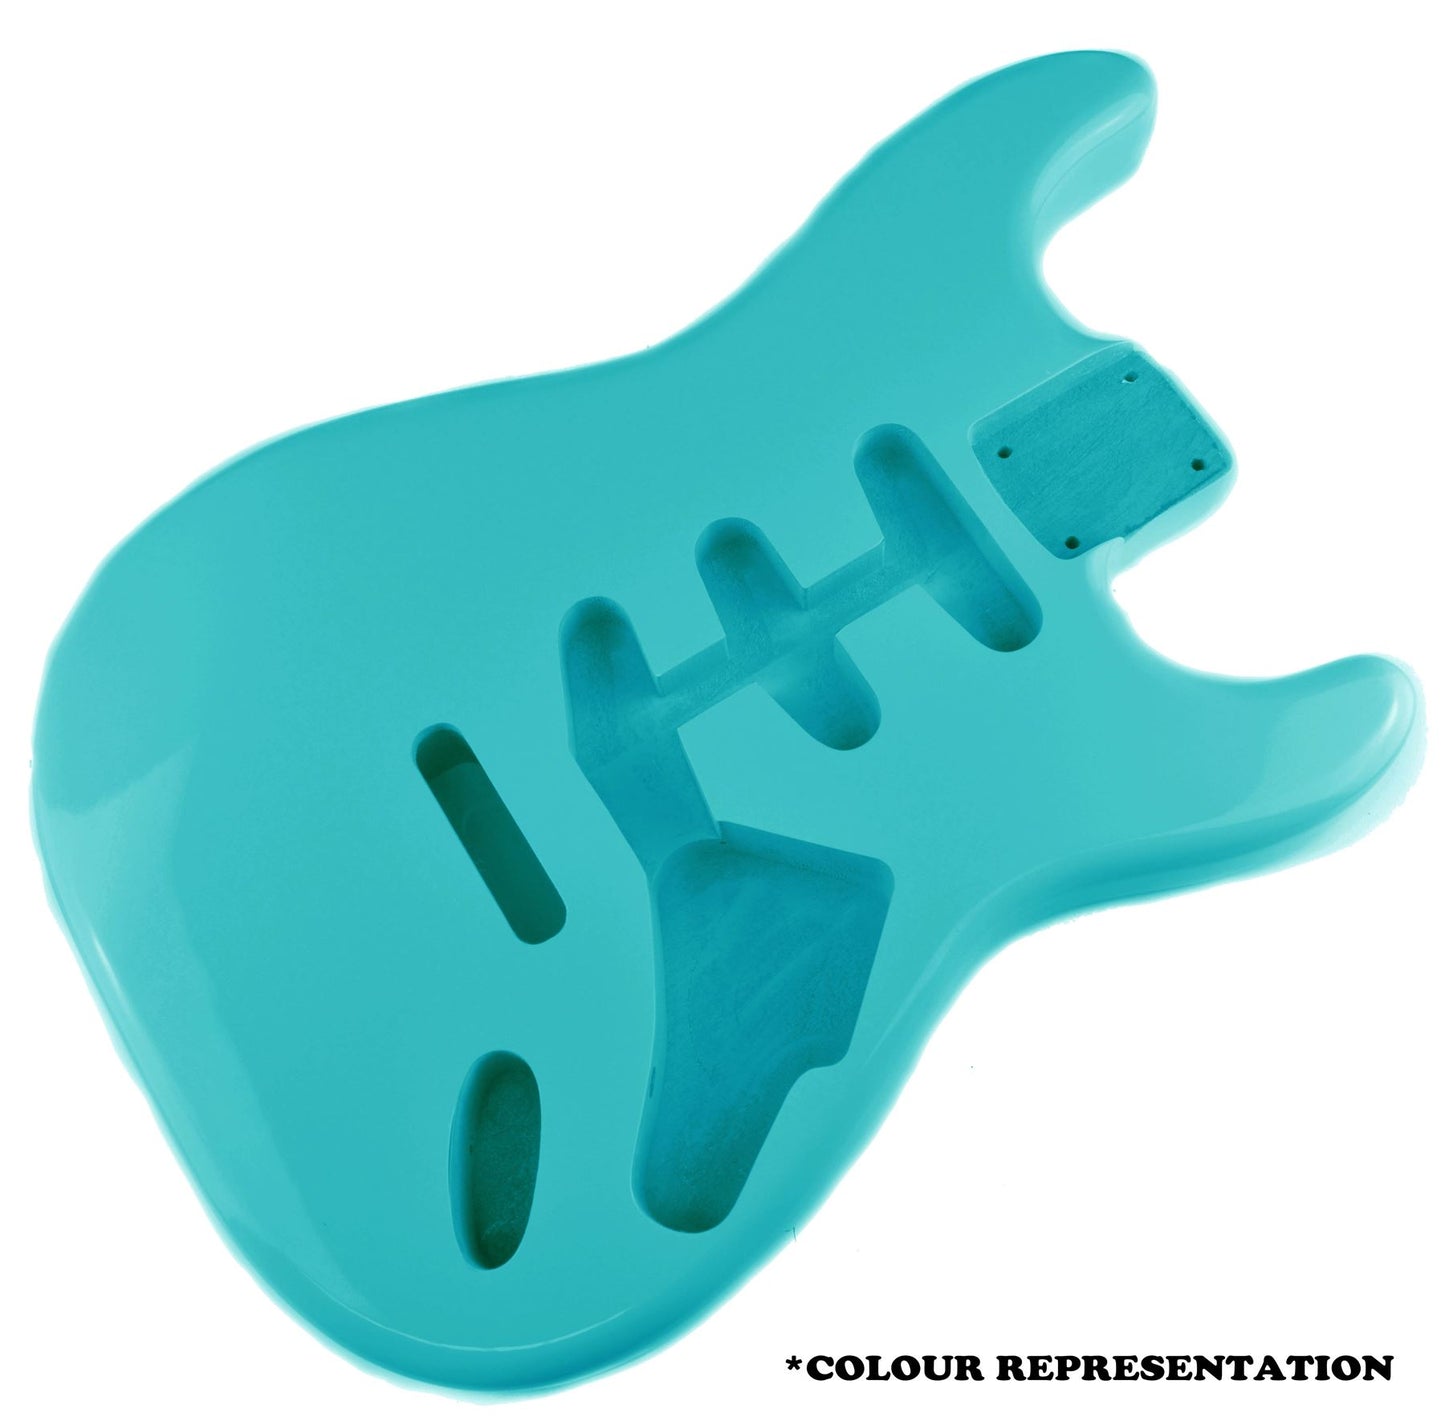 Seafoam Green Nitrocellulose Guitar Paint / Lacquer 250ml